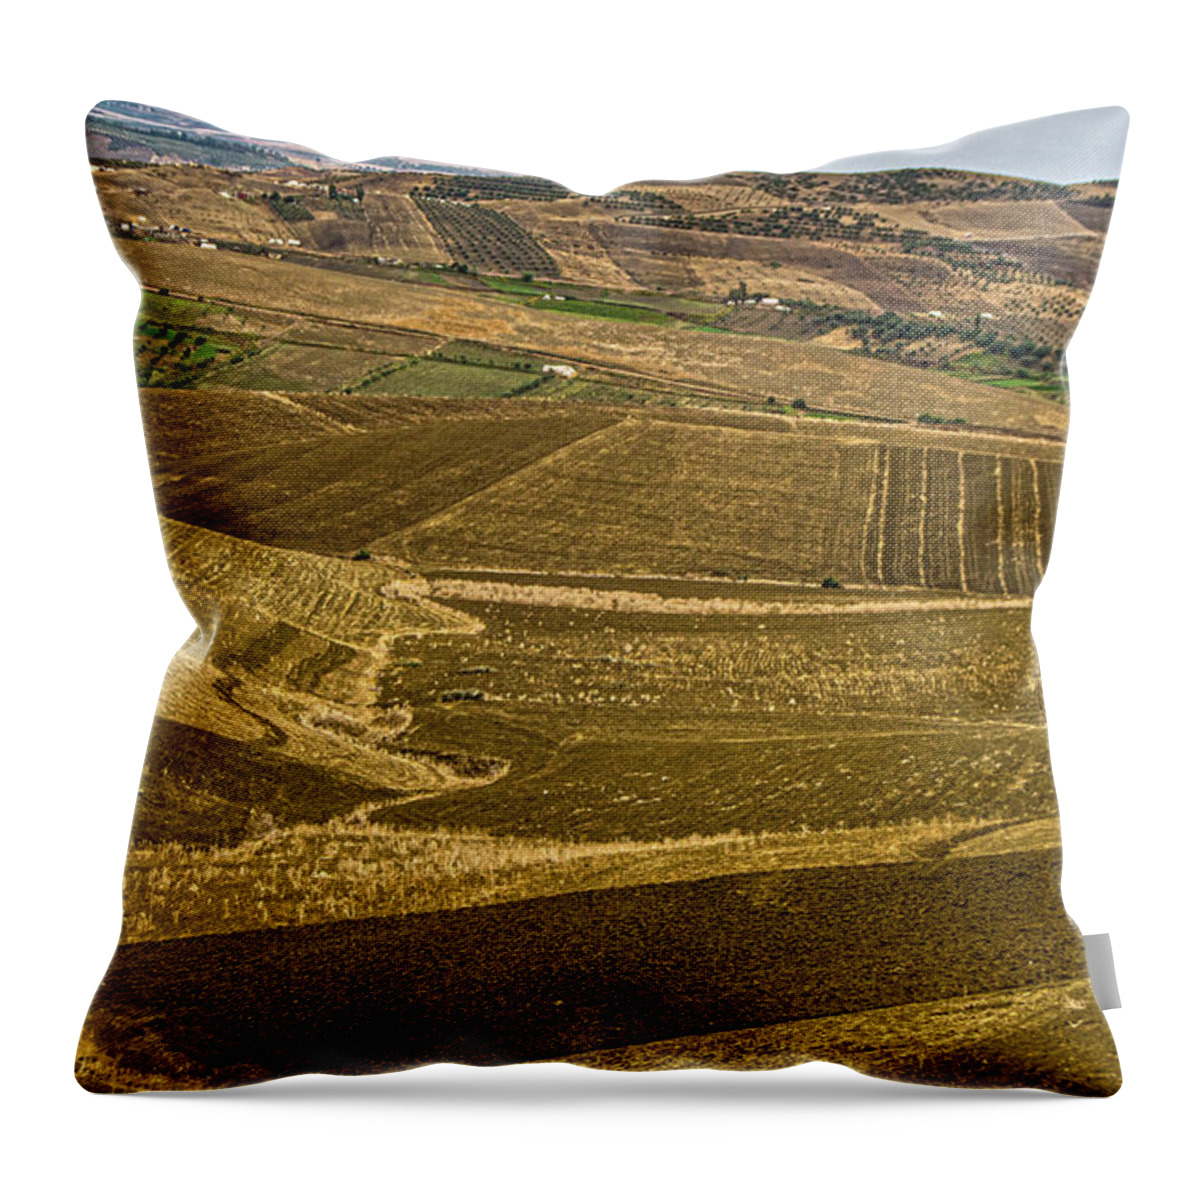 Morroco Throw Pillow featuring the photograph Morrocan Terrain by Edward Shmunes